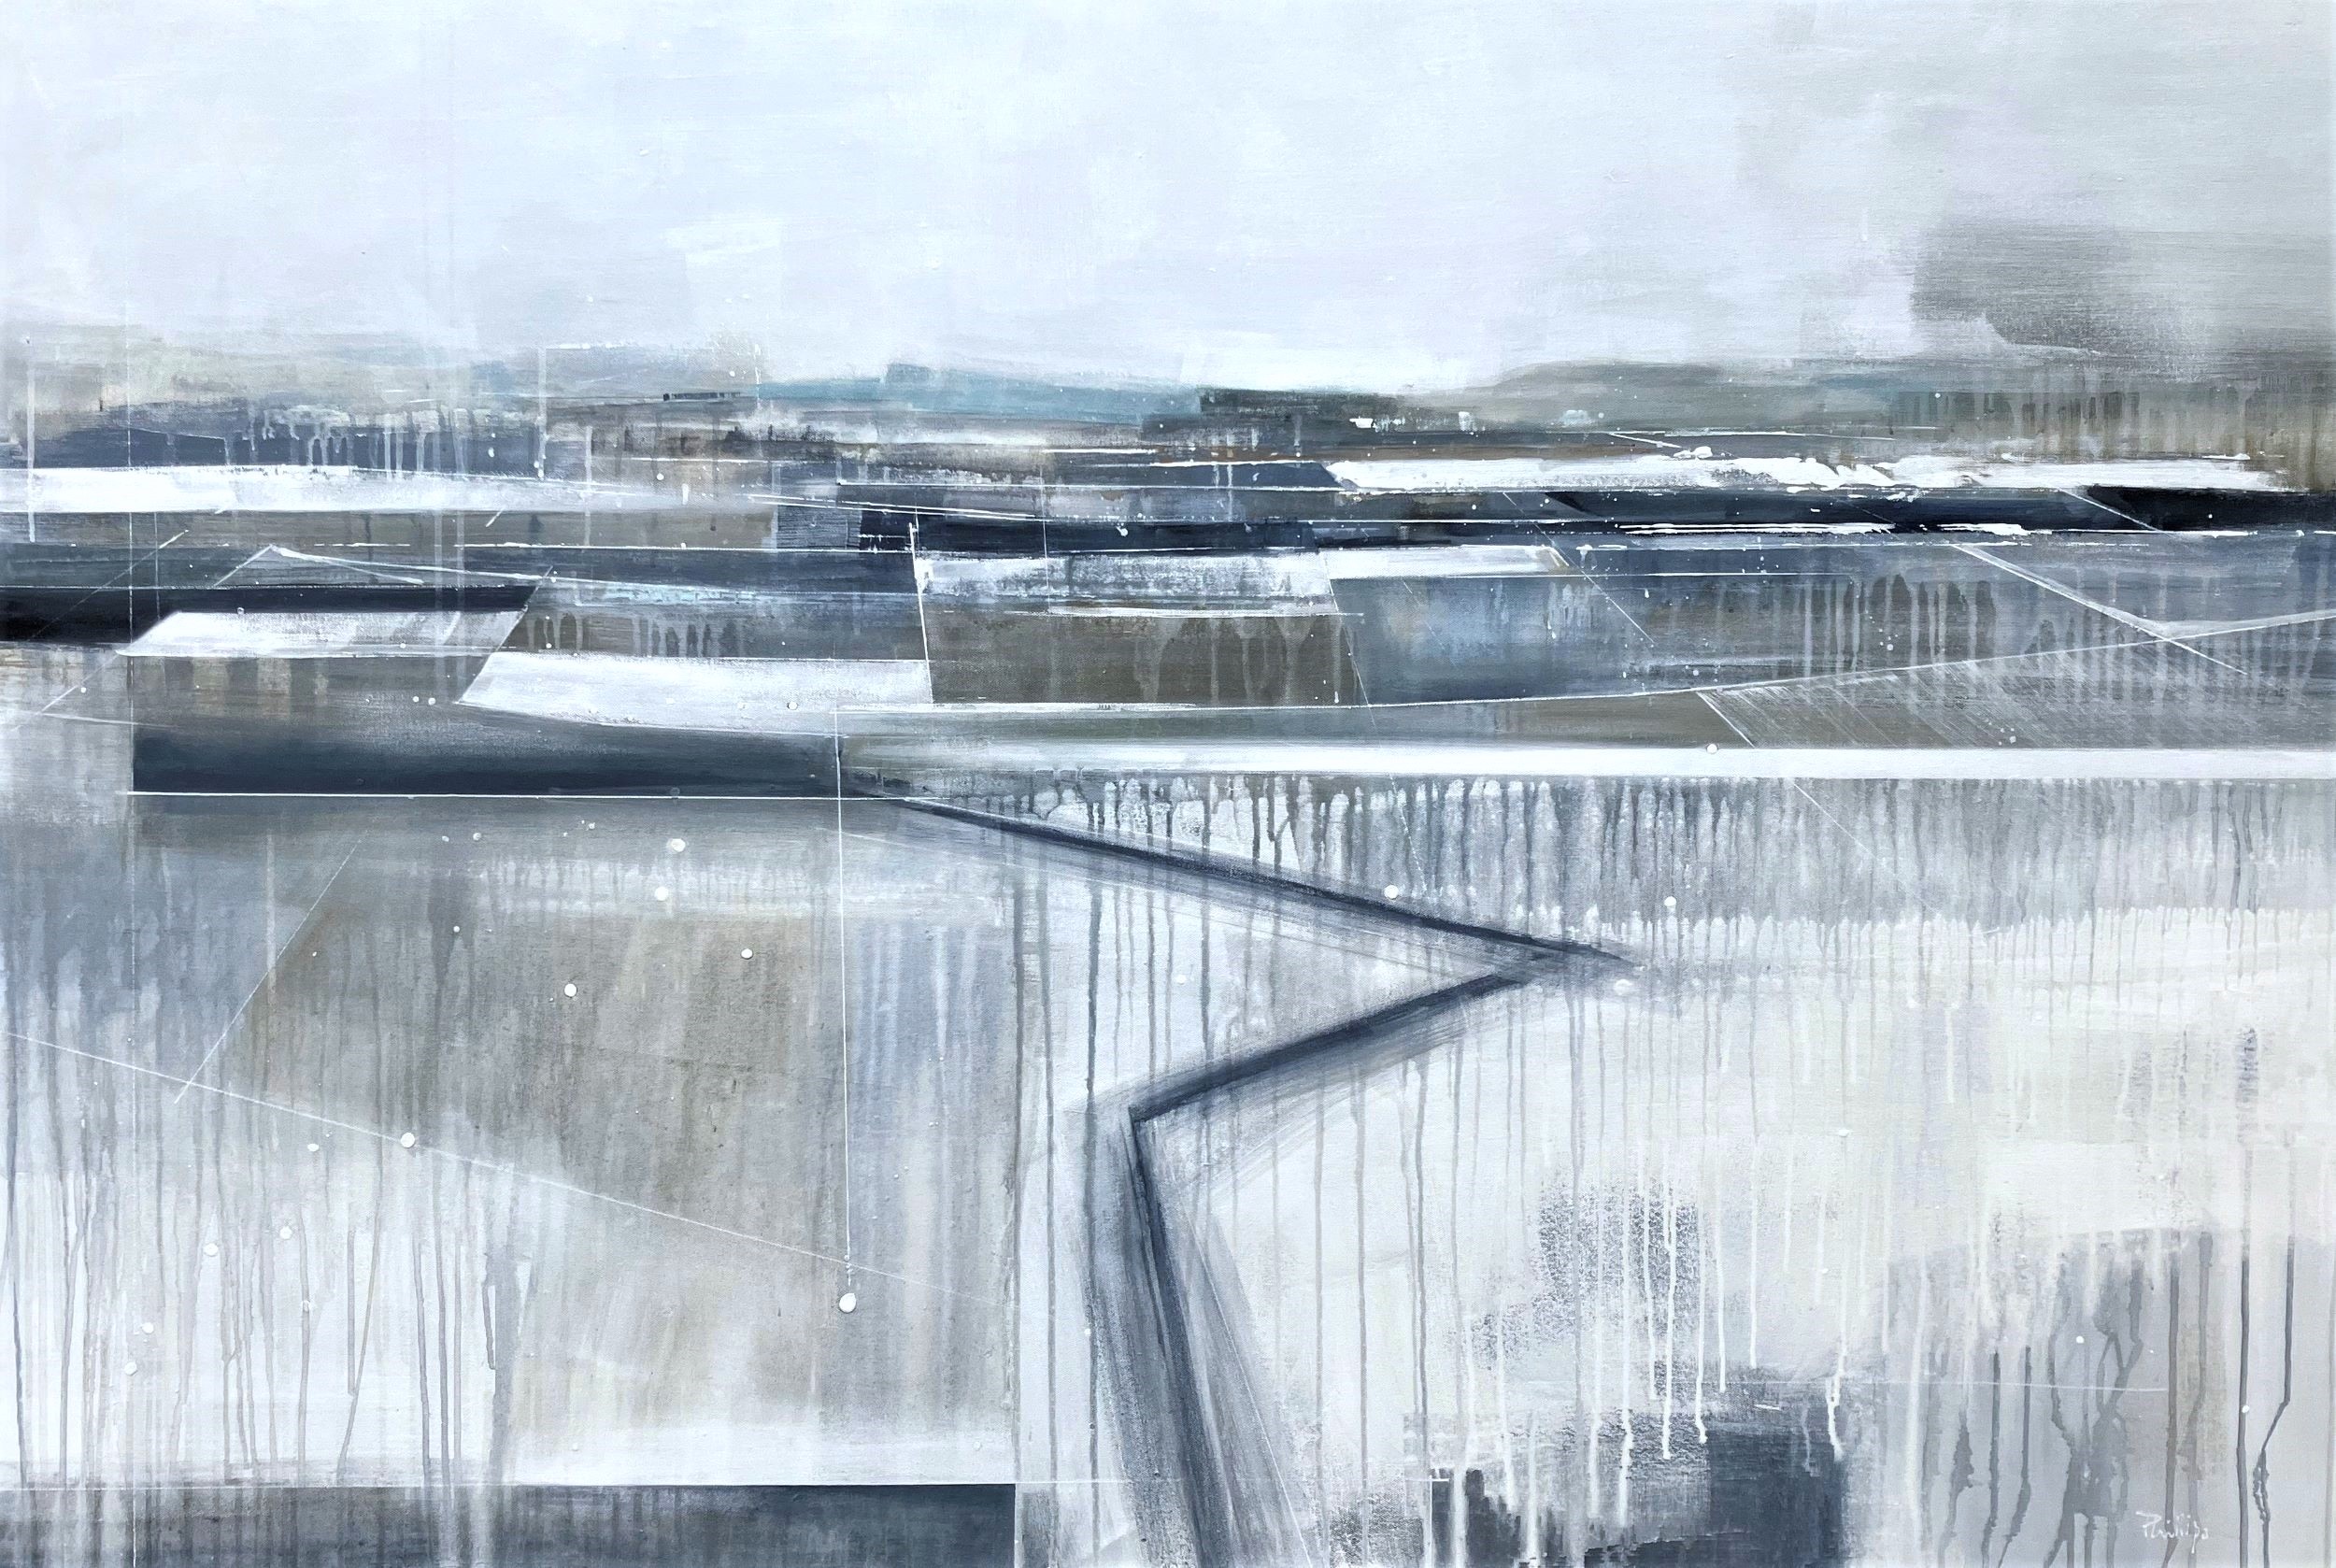 'Winter Landscape' by artist Amanda Phillips